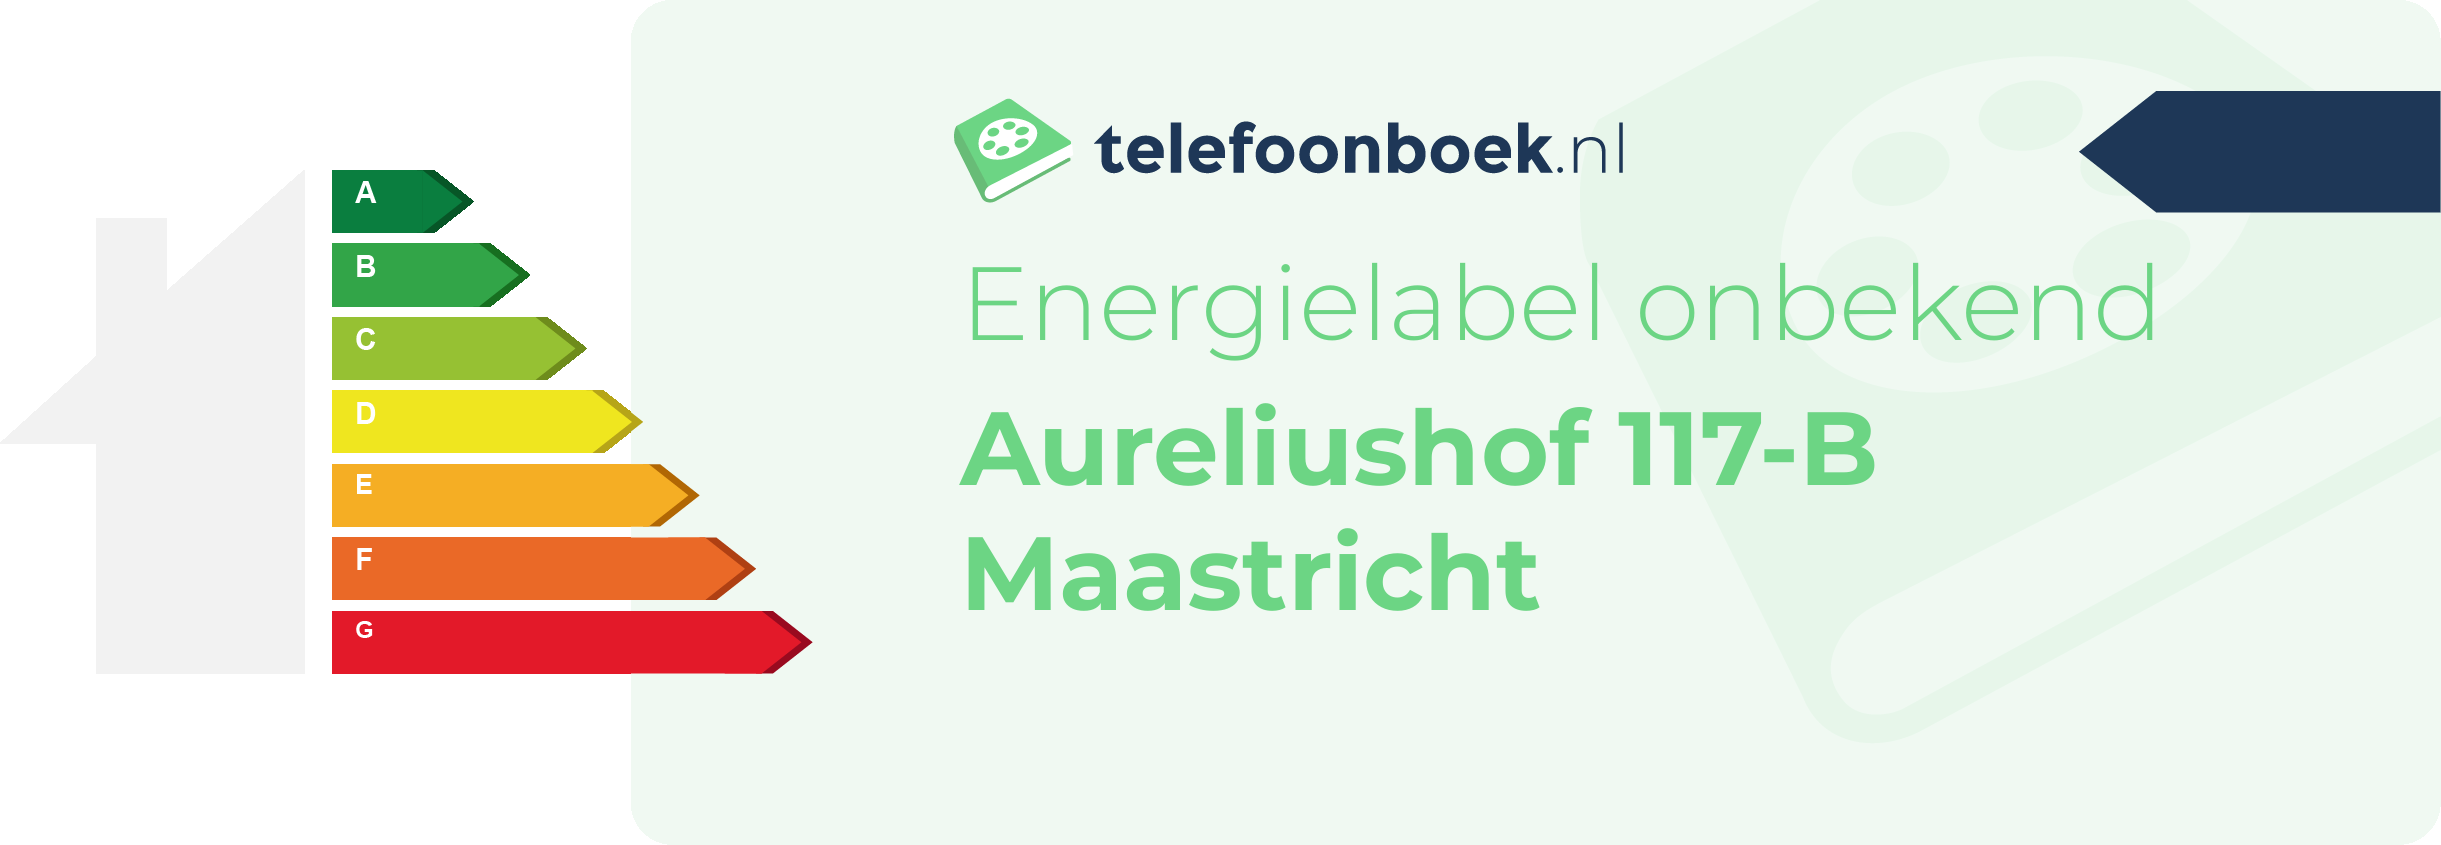 Energielabel Aureliushof 117-B Maastricht